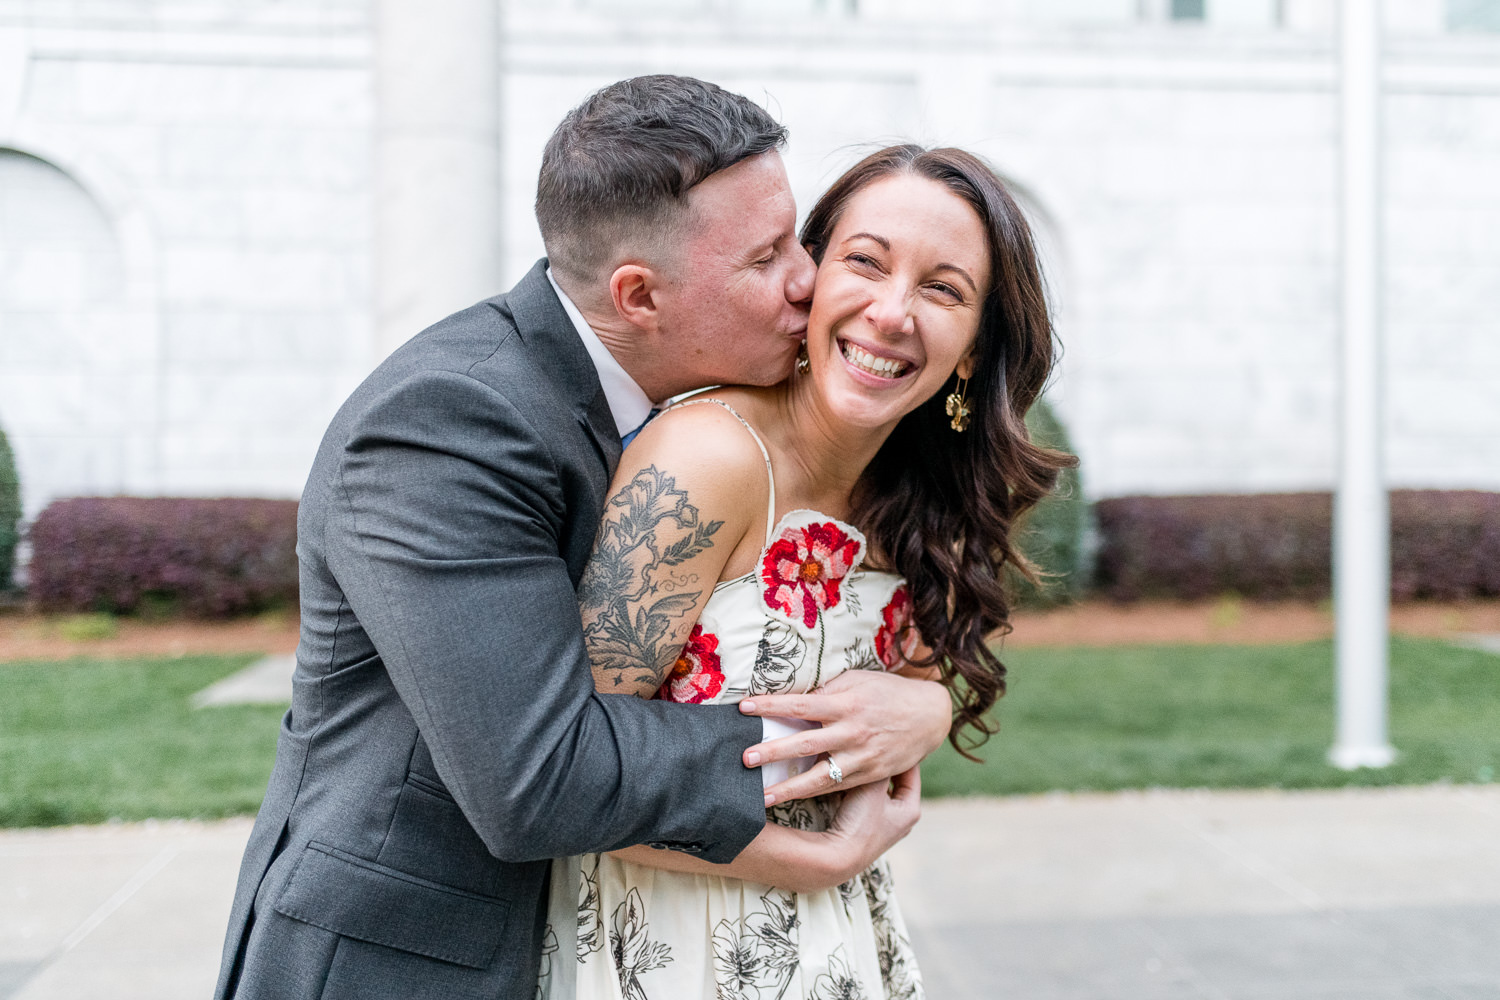 couples portraits at surprise rooftop wedding in midtown atlanta